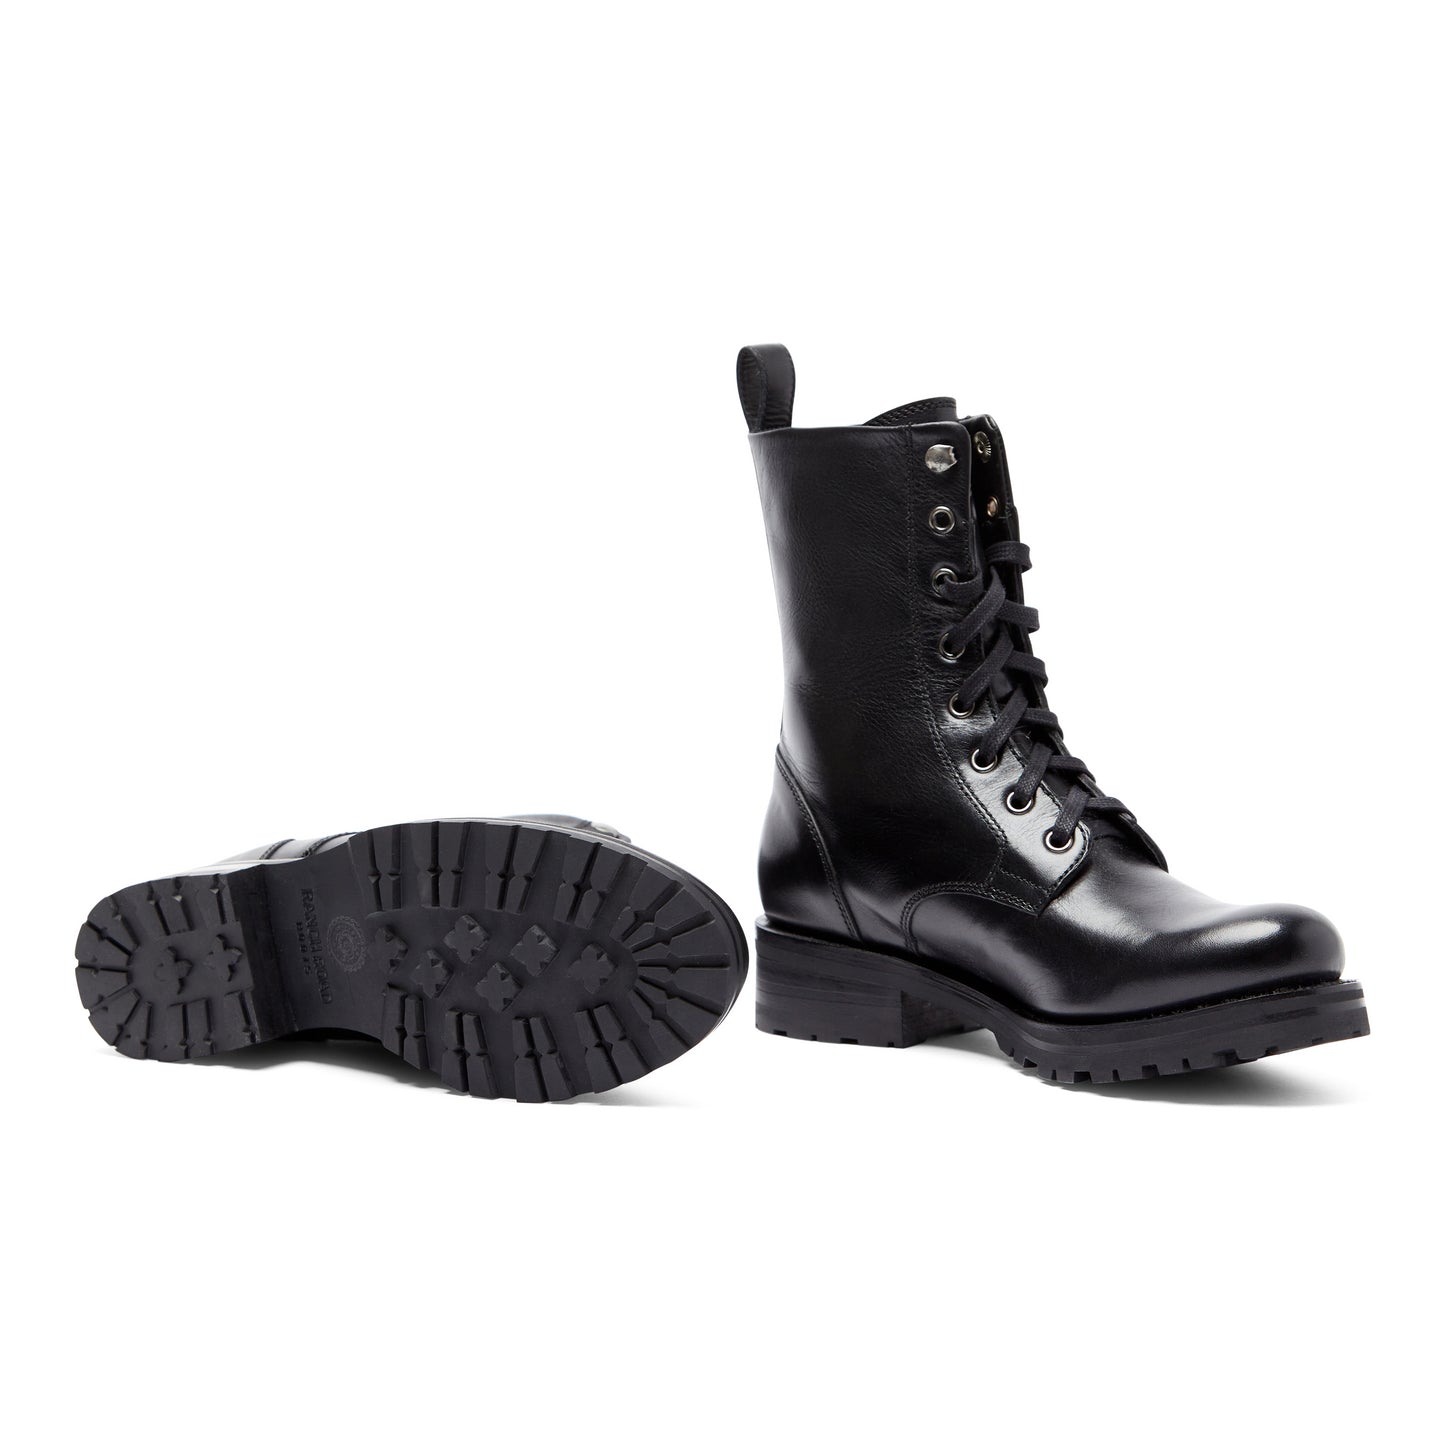 Ranch Road Boots - Poppy Combat - Black - Sole Detail